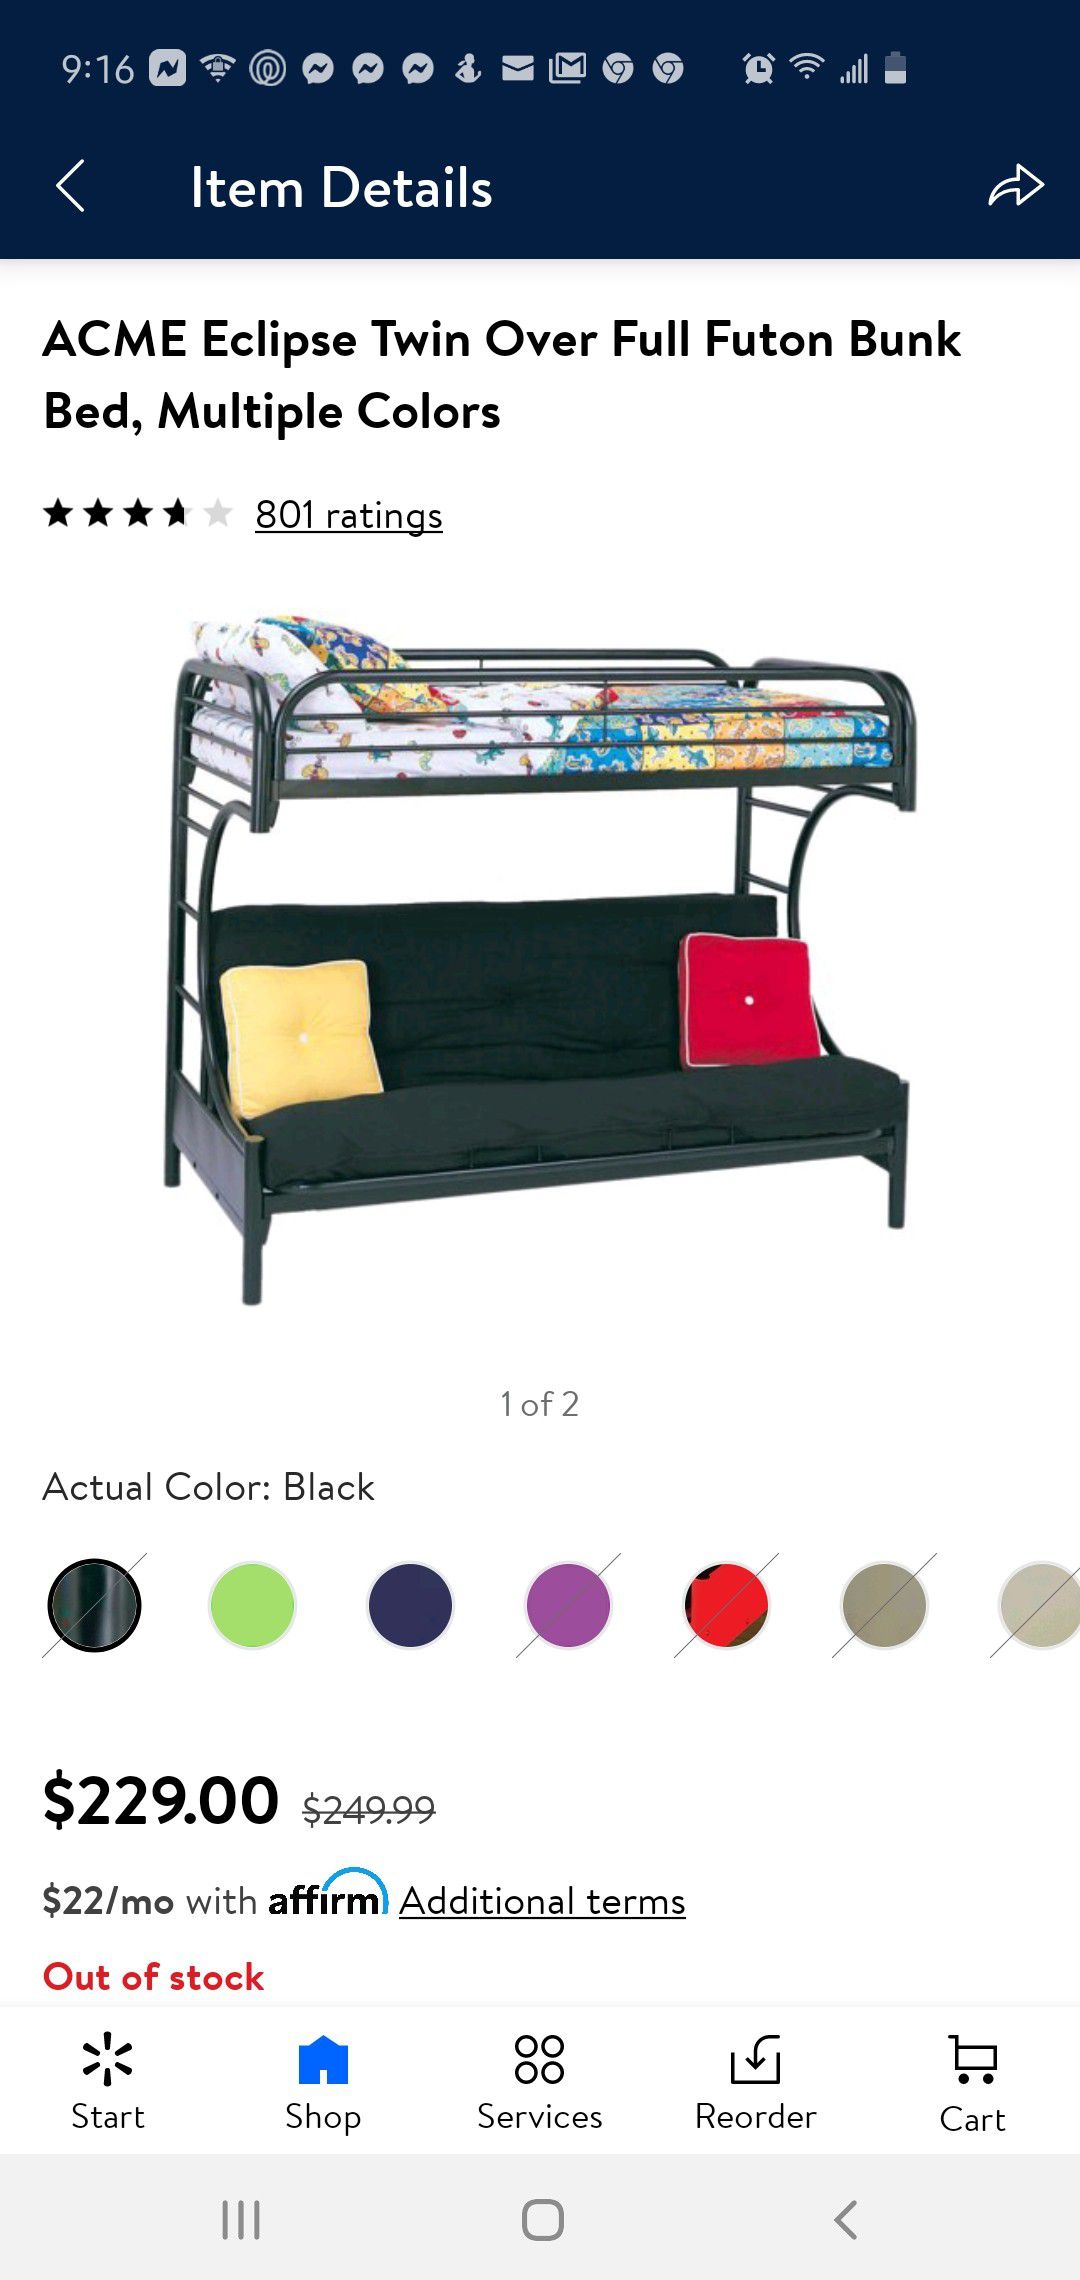 Futon bunk bed